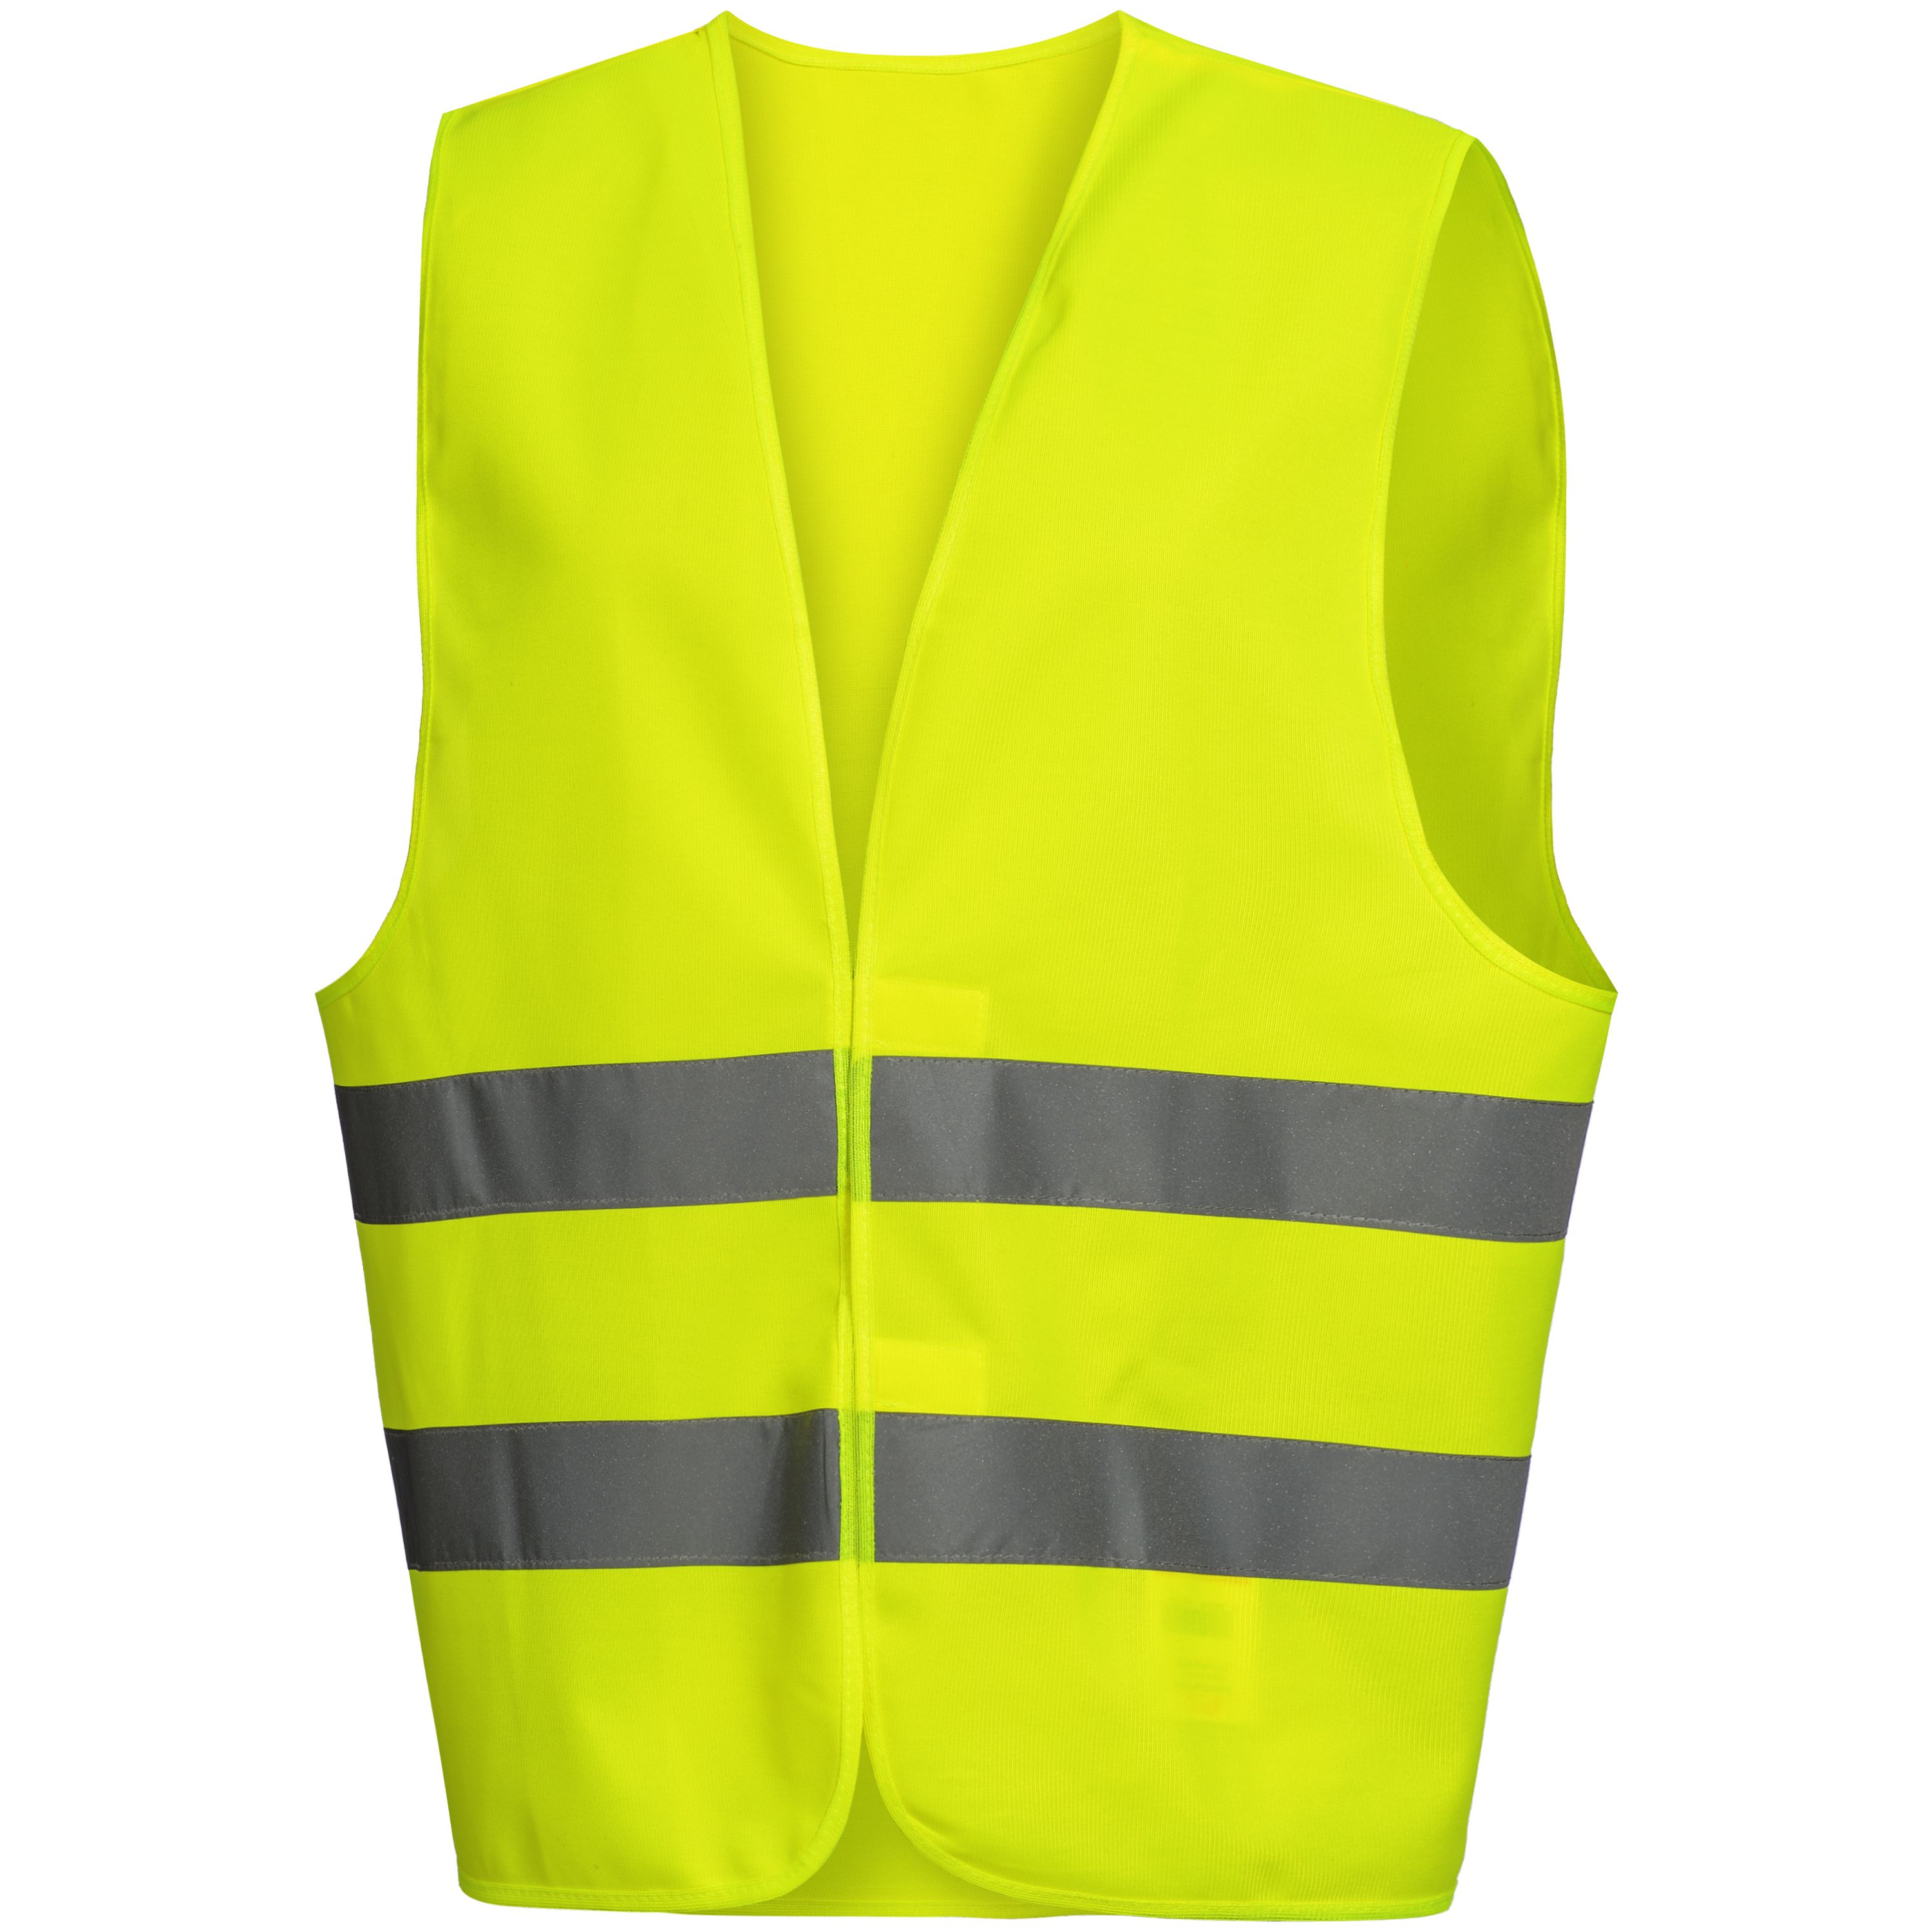 NITRAS MOTION TEX VIZ 7111 high-visibility waistcoat - lightweight waistcoat in high-visibility colour for work - neon yellow - XXL